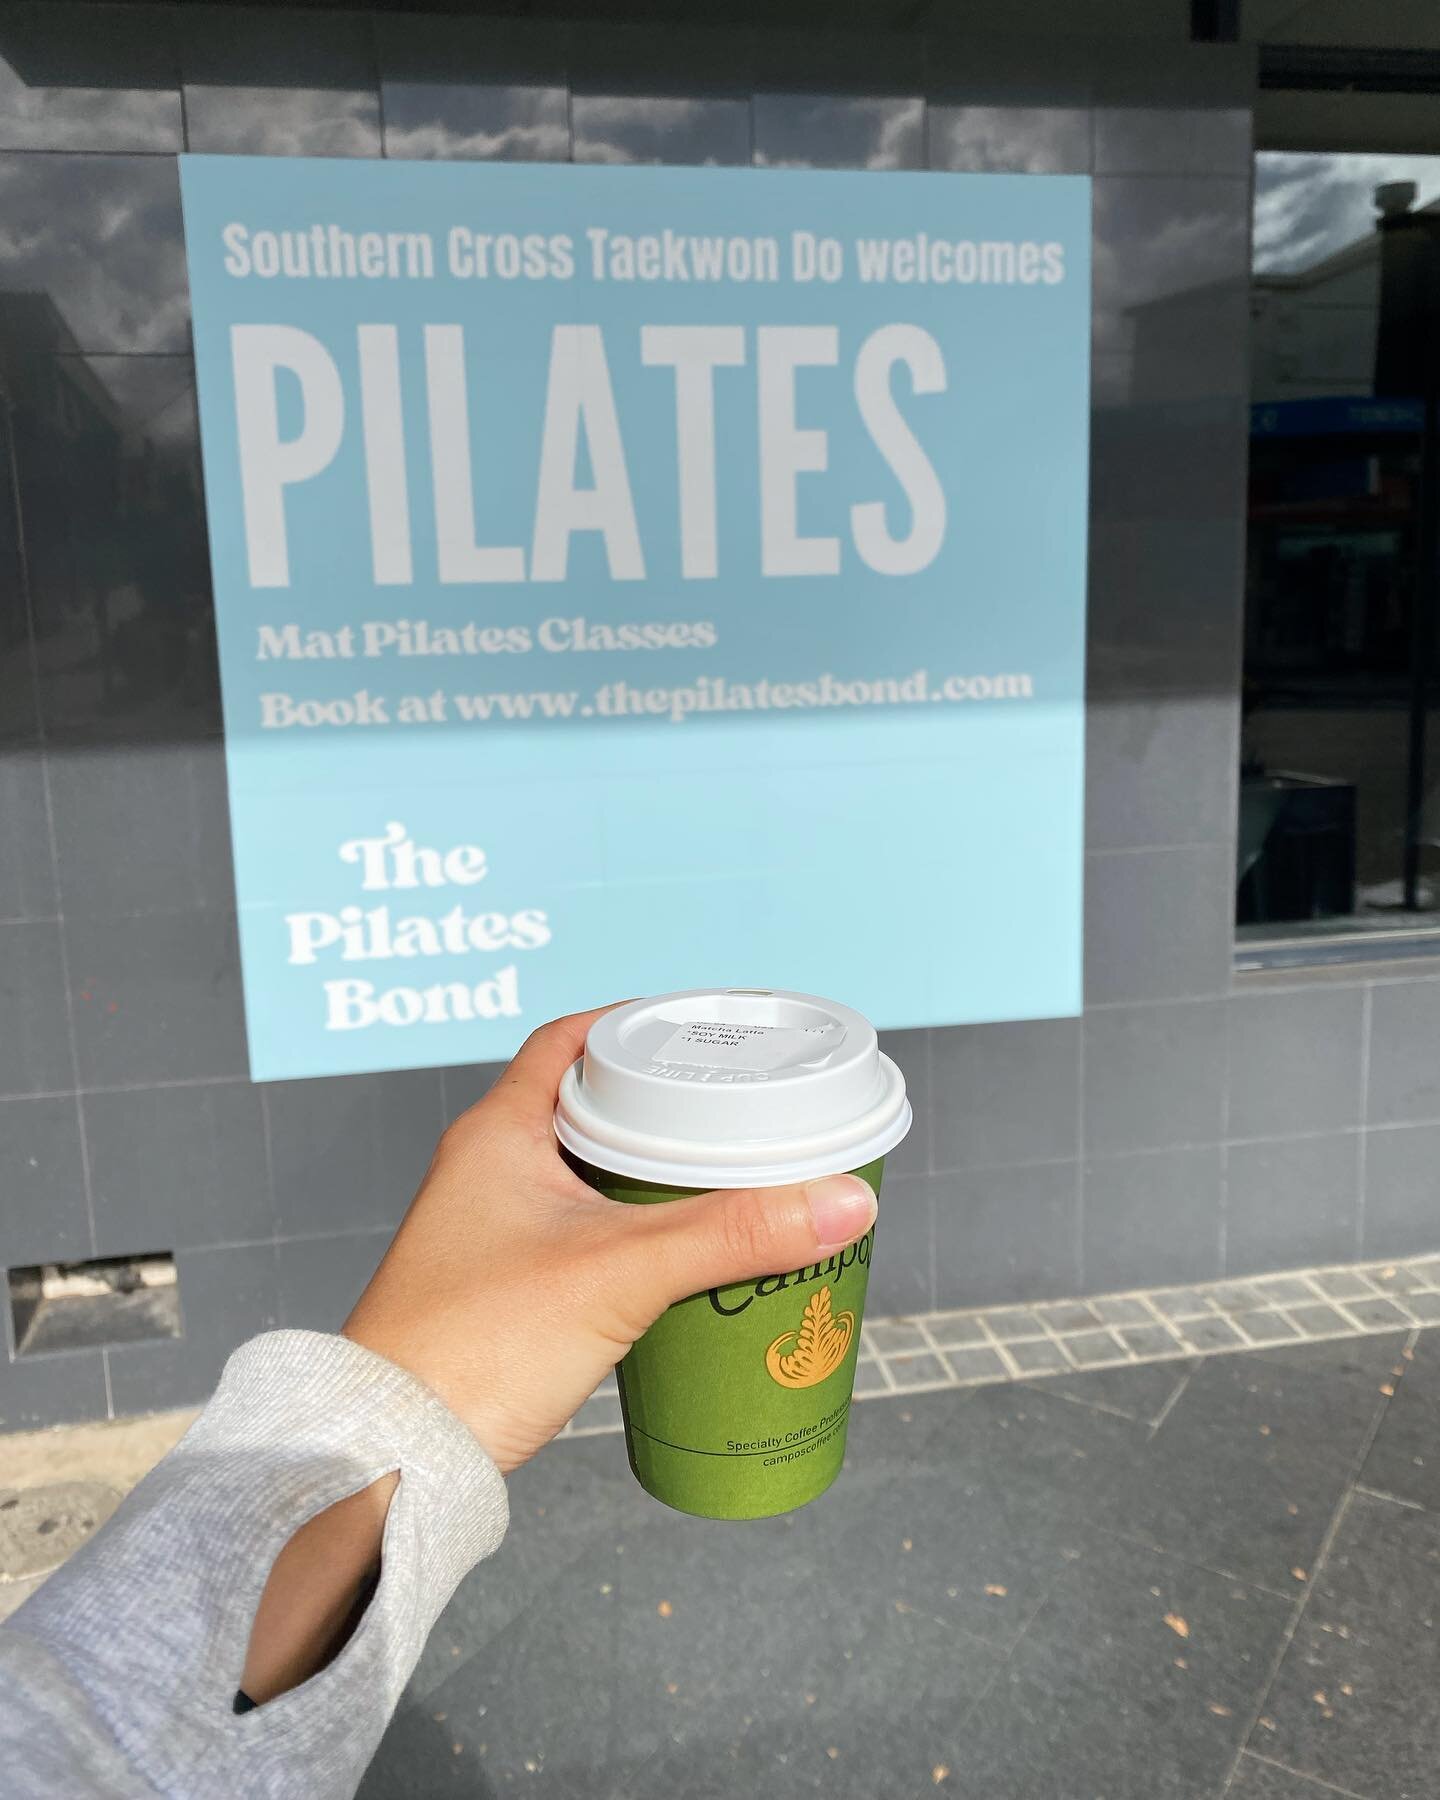 Saturday morning post Pilates treat with Bik&rsquo;s cafe next door 😏 

#pilates #matpilates #groupexercise #movment #exercise #coffee #botany #baysidesydney